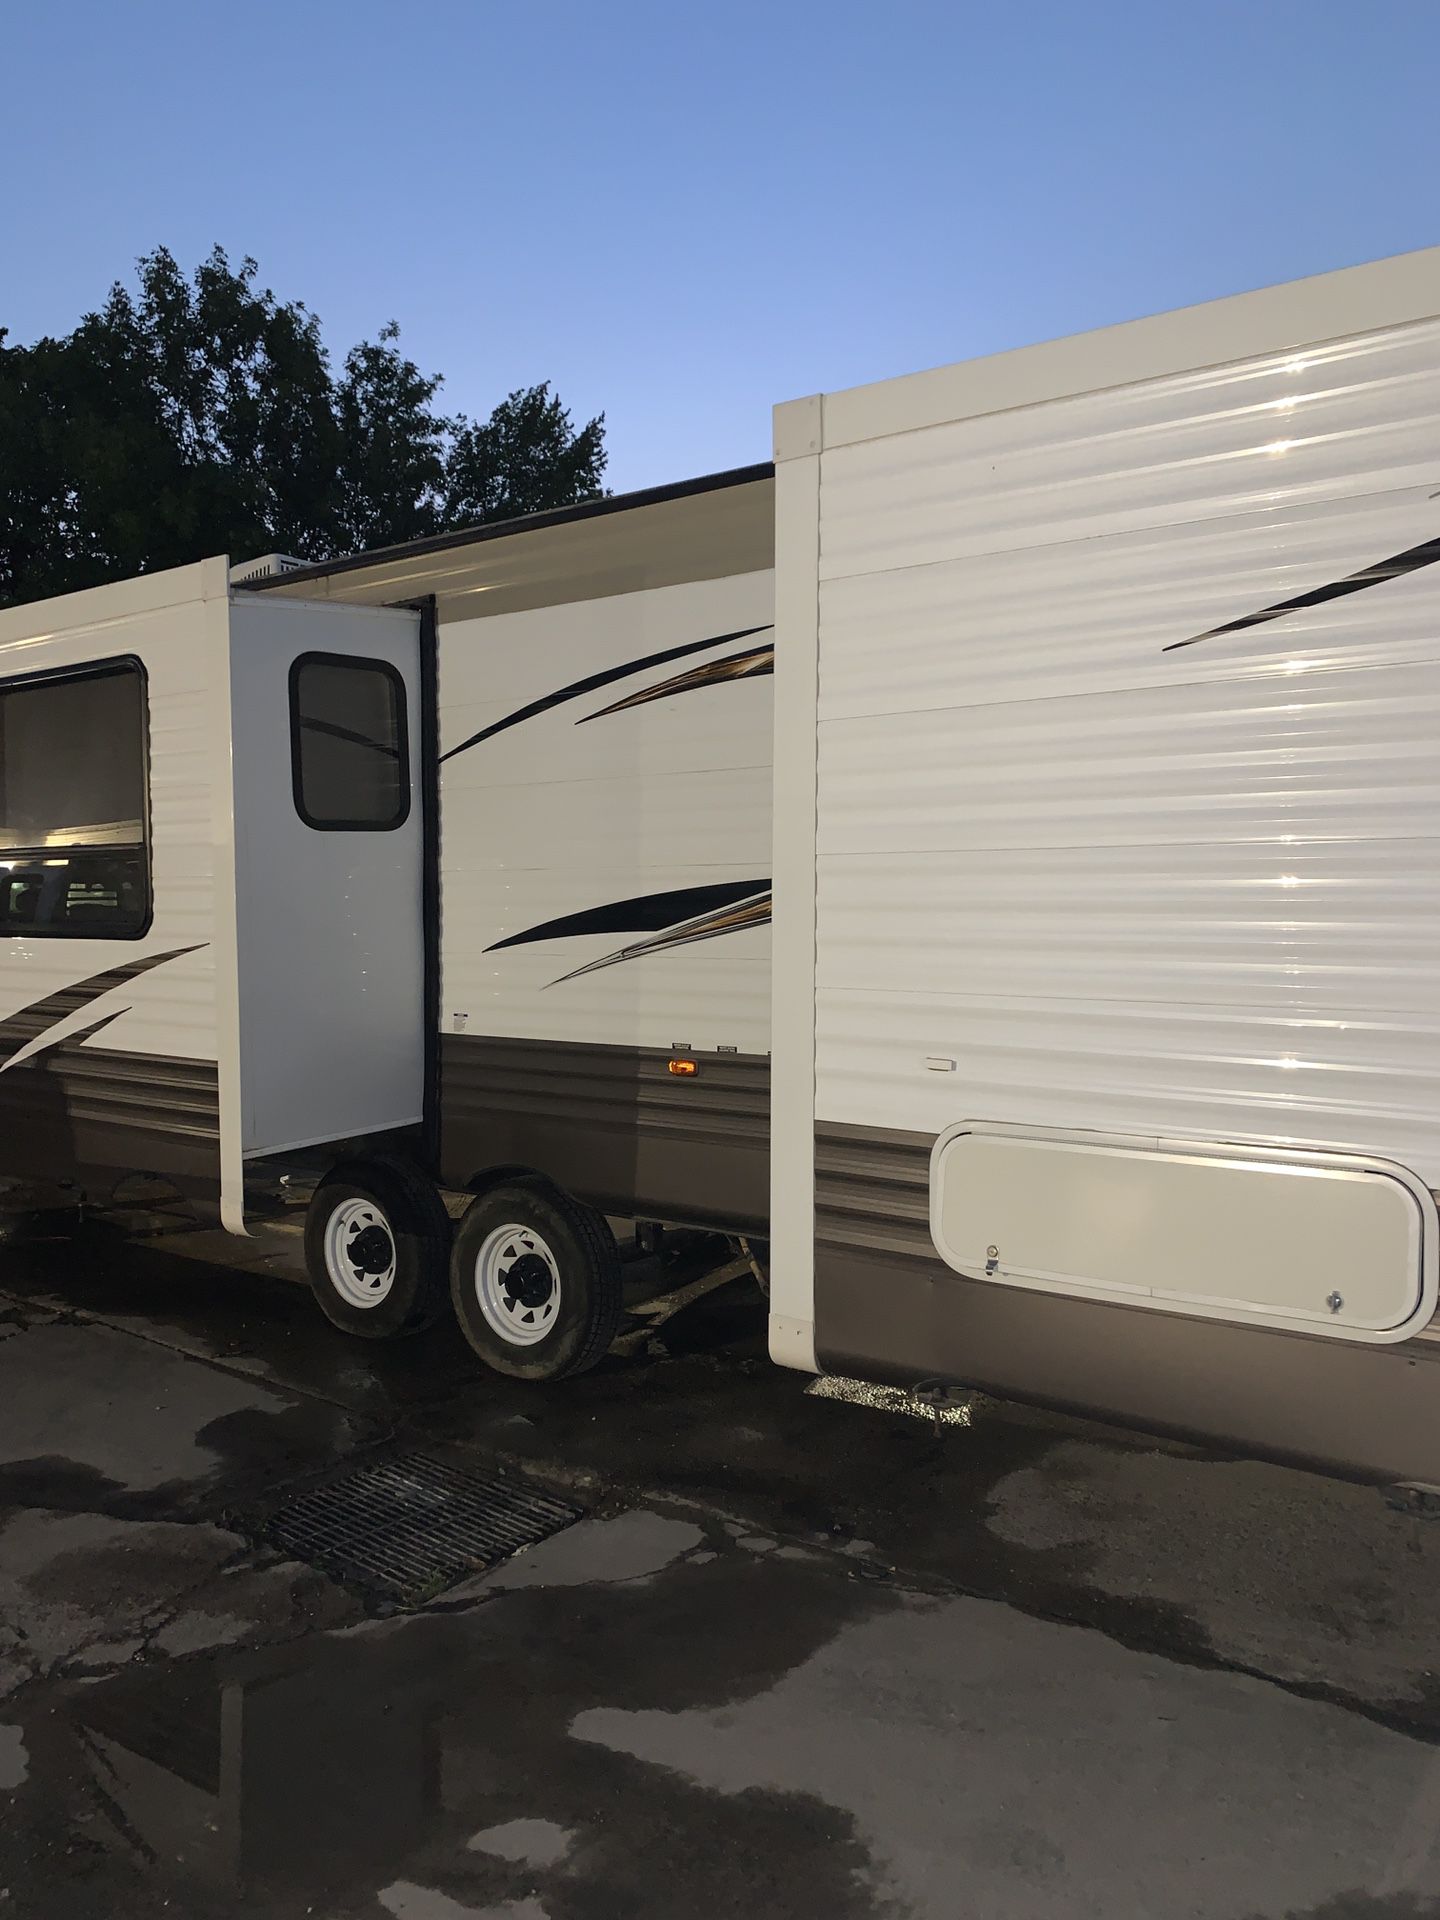 2019 Wildwood 36 foot travel trailer